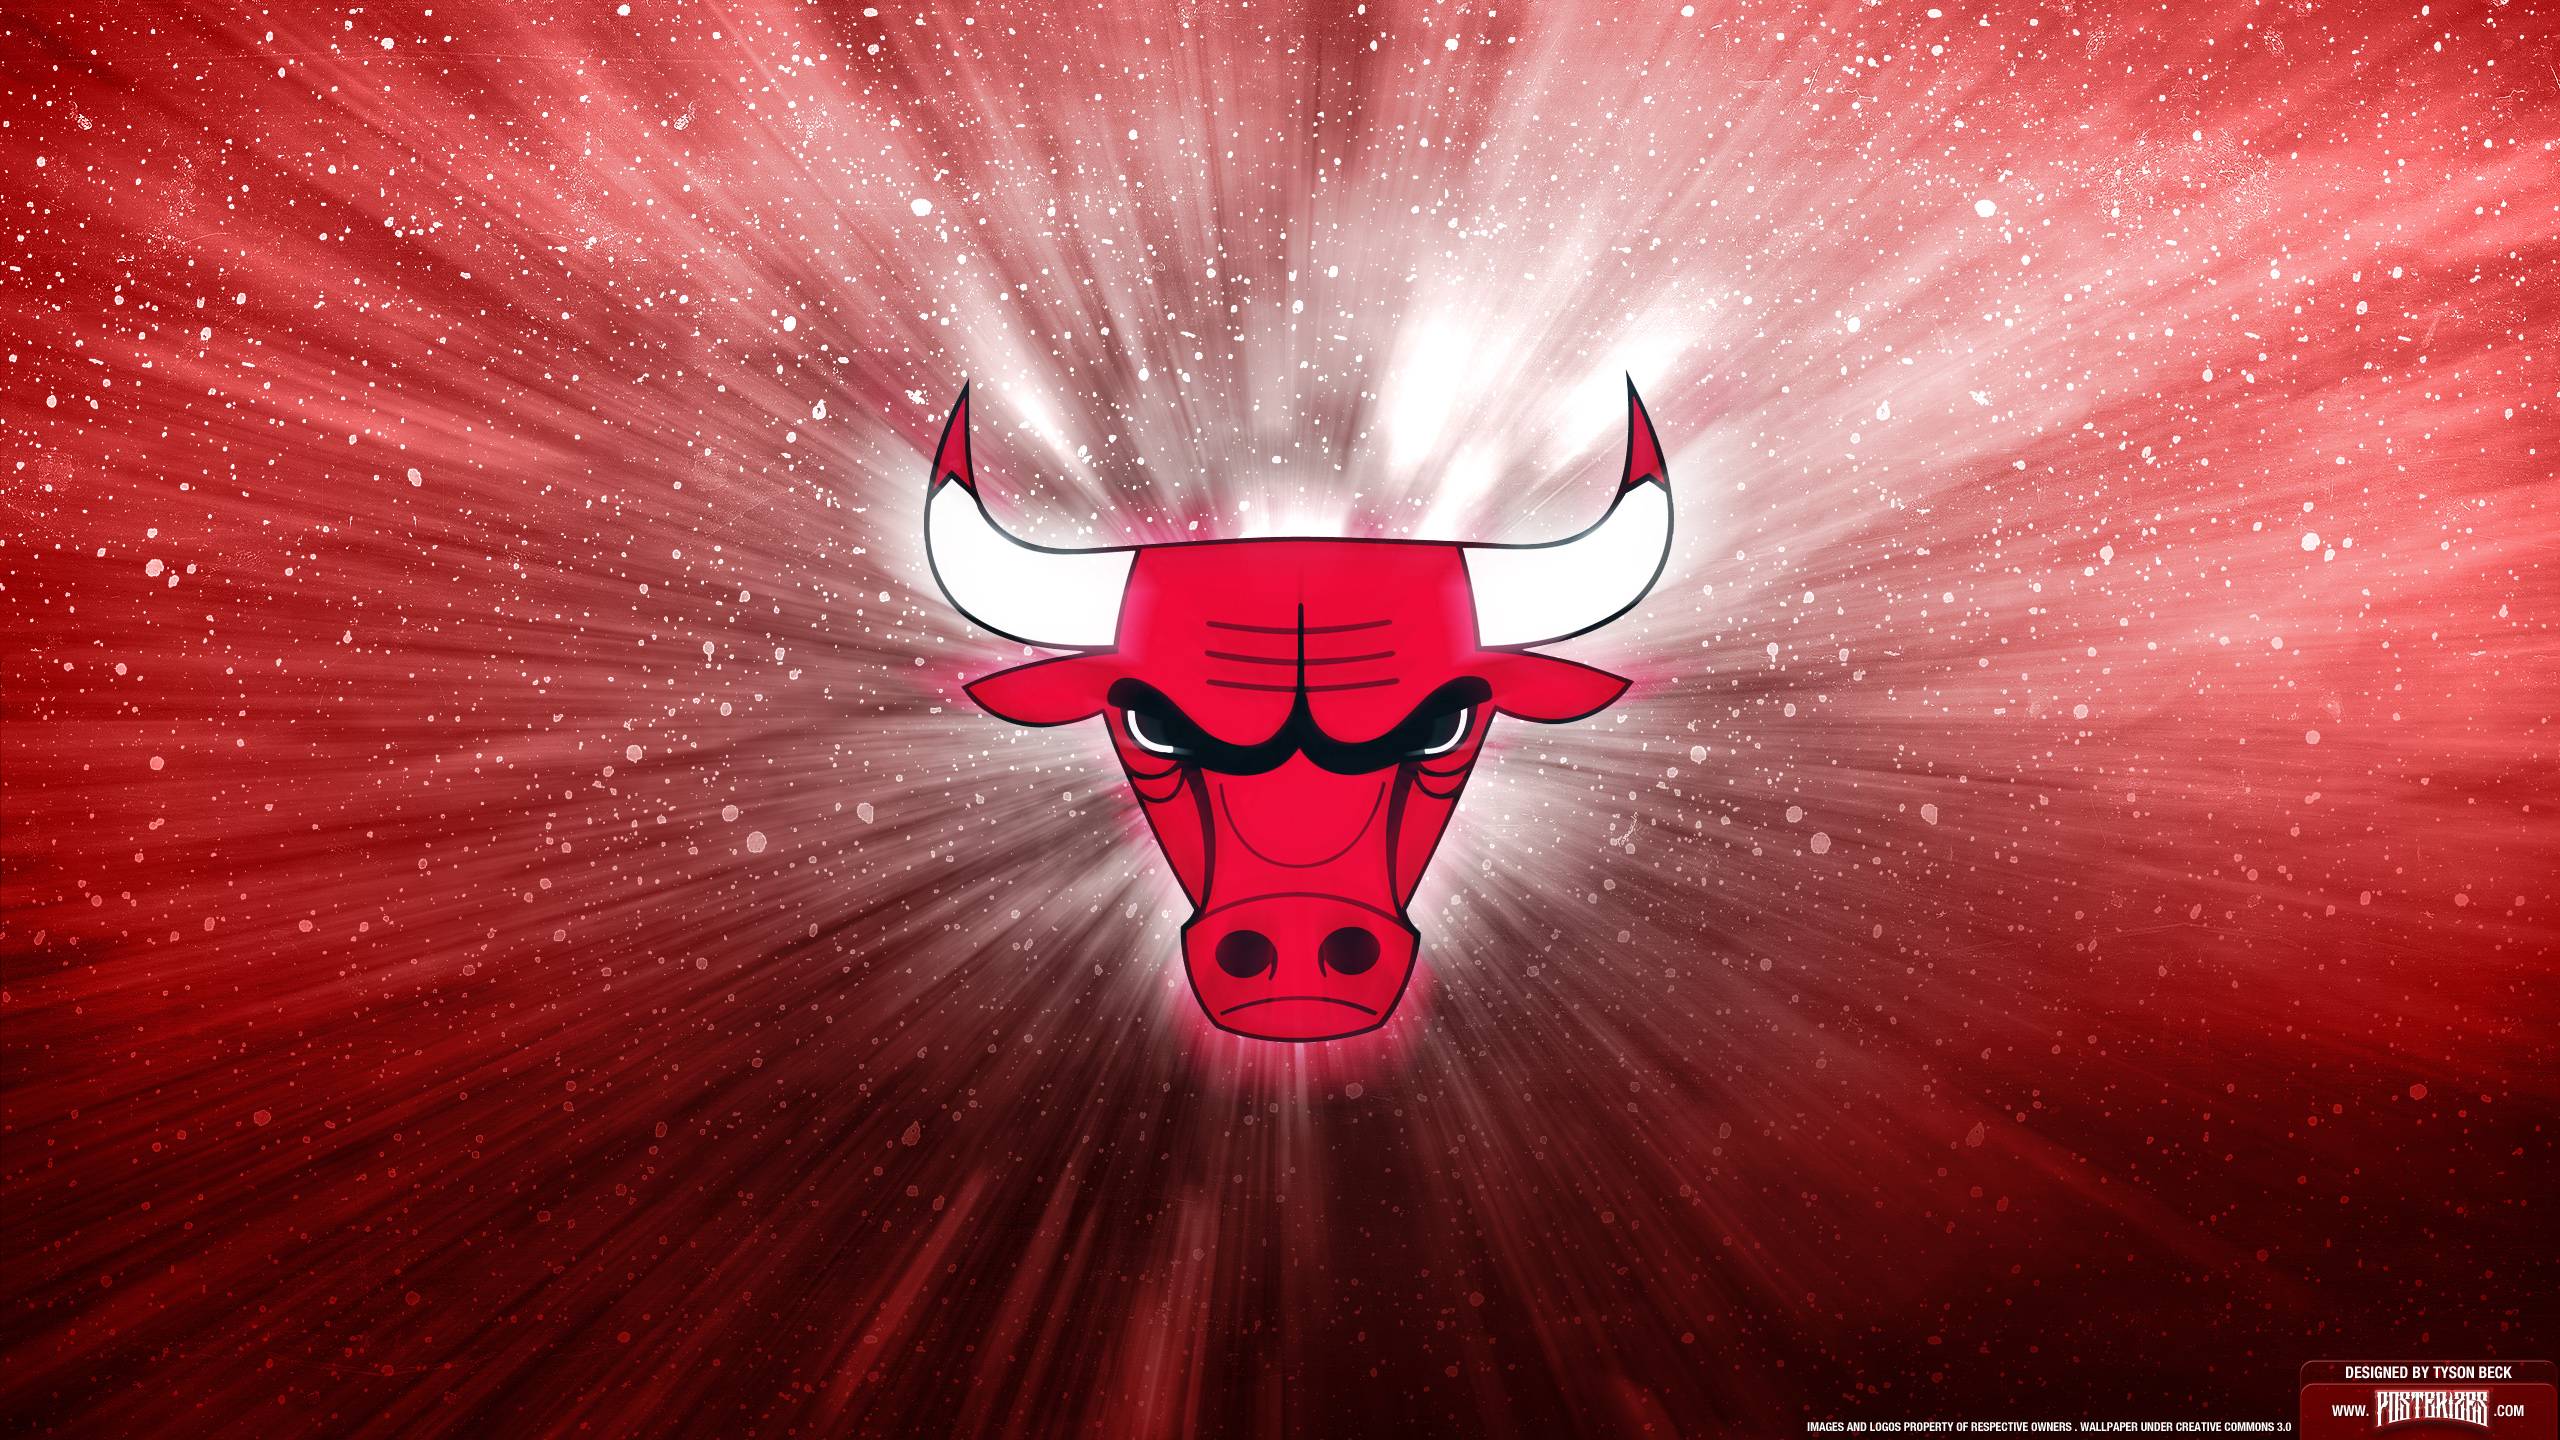 Chicago Bulls rumors